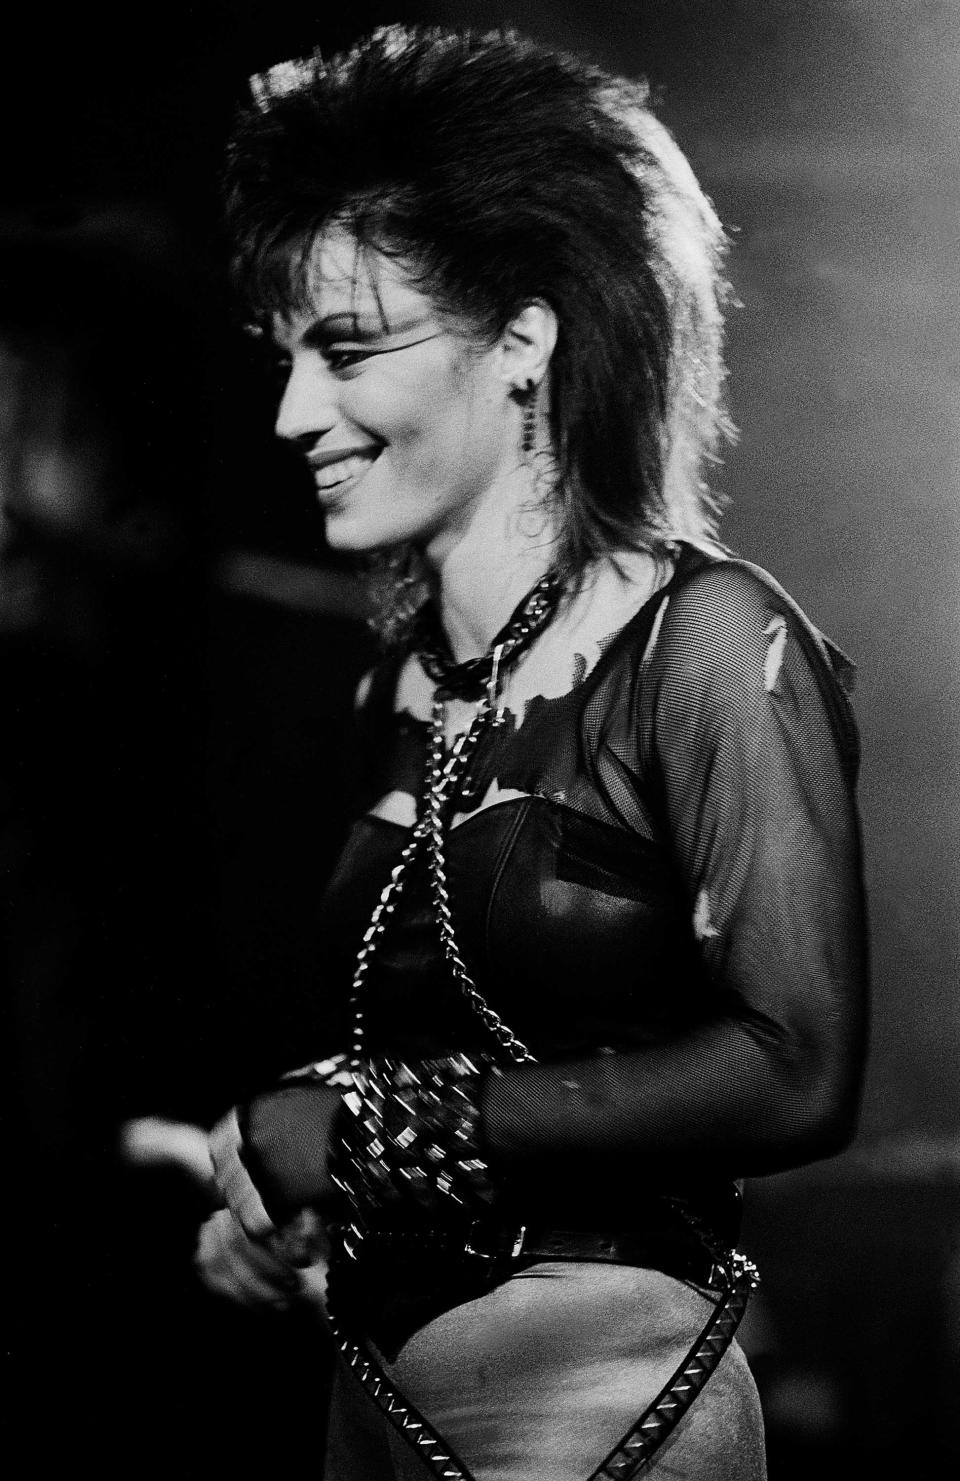 A teenage phenomenon in the Runaways, the guitarist Joan Jett blazed a trail for female rock stars with one singularly badass head of hair.